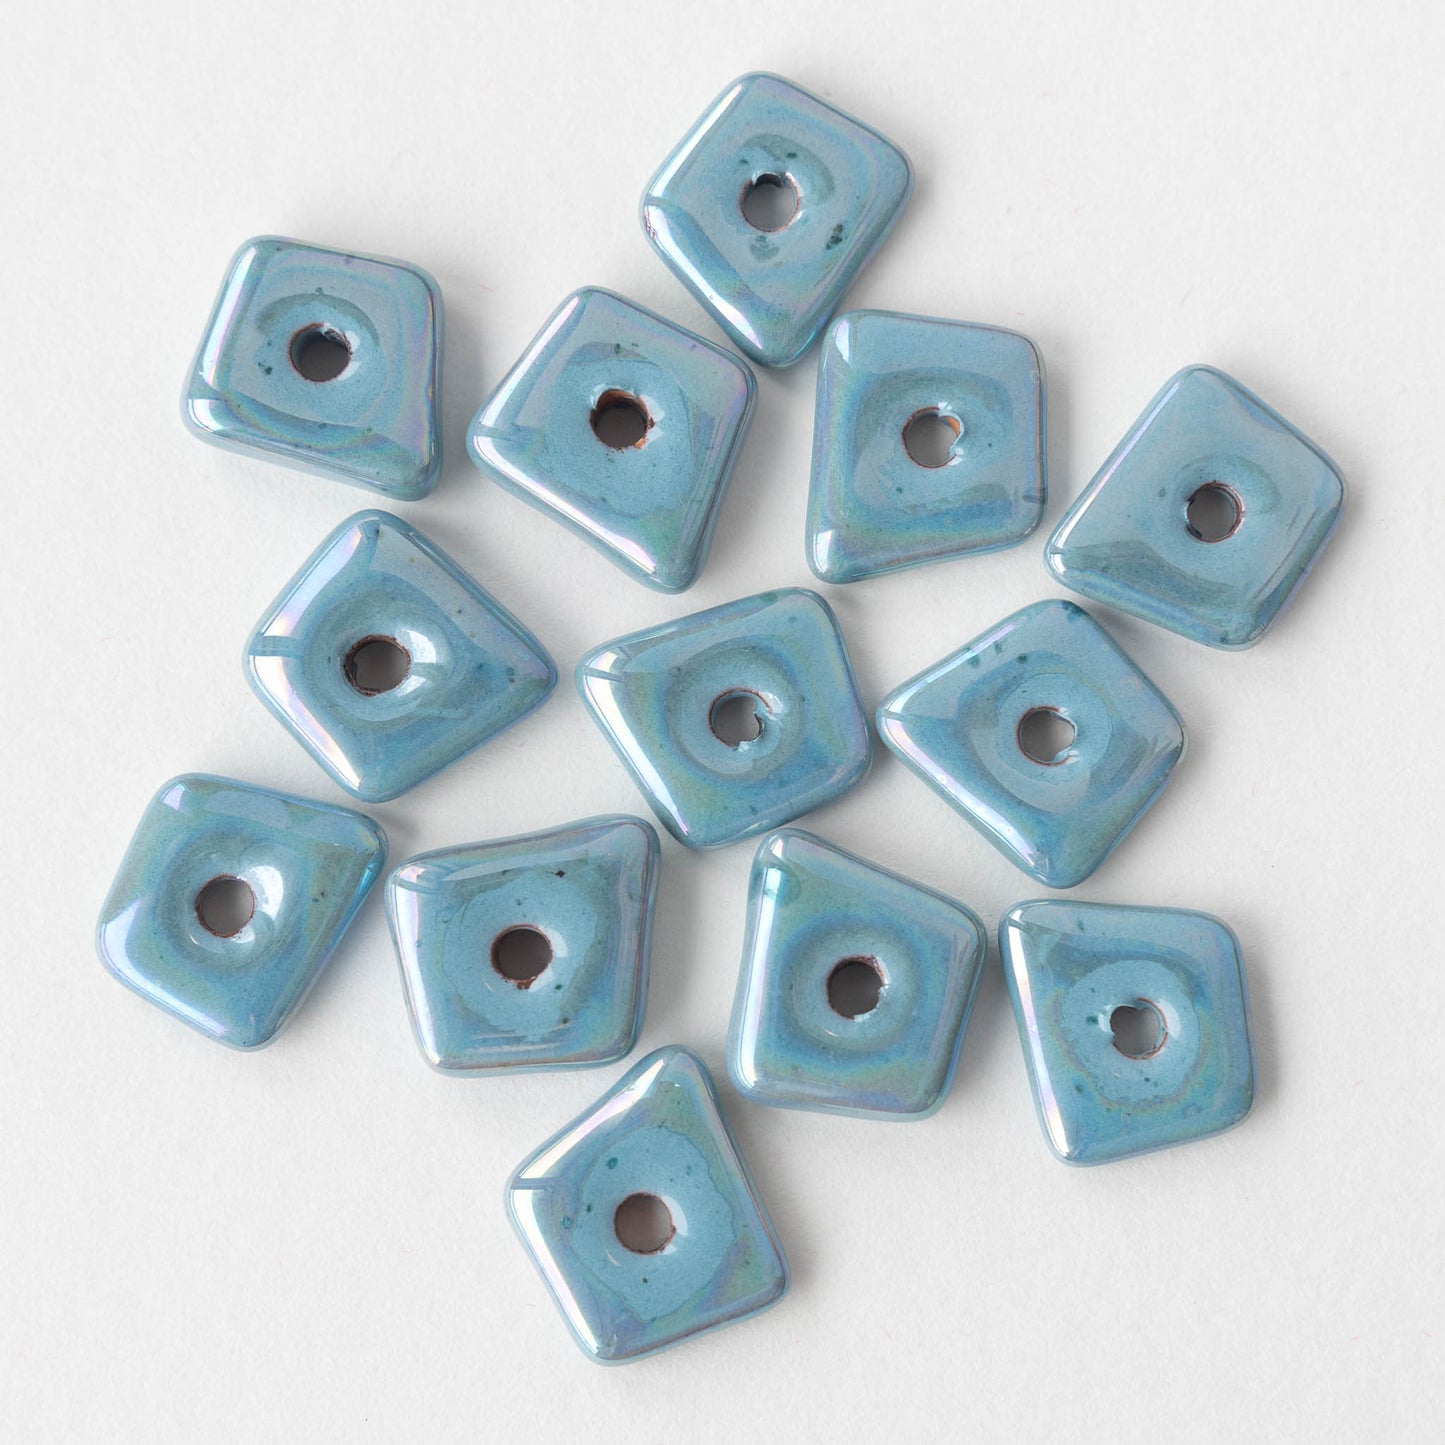 13-14mm Glazed Ceramic Irregular Square Tiles - Opaque Blue Iridescent  - 10 or 30